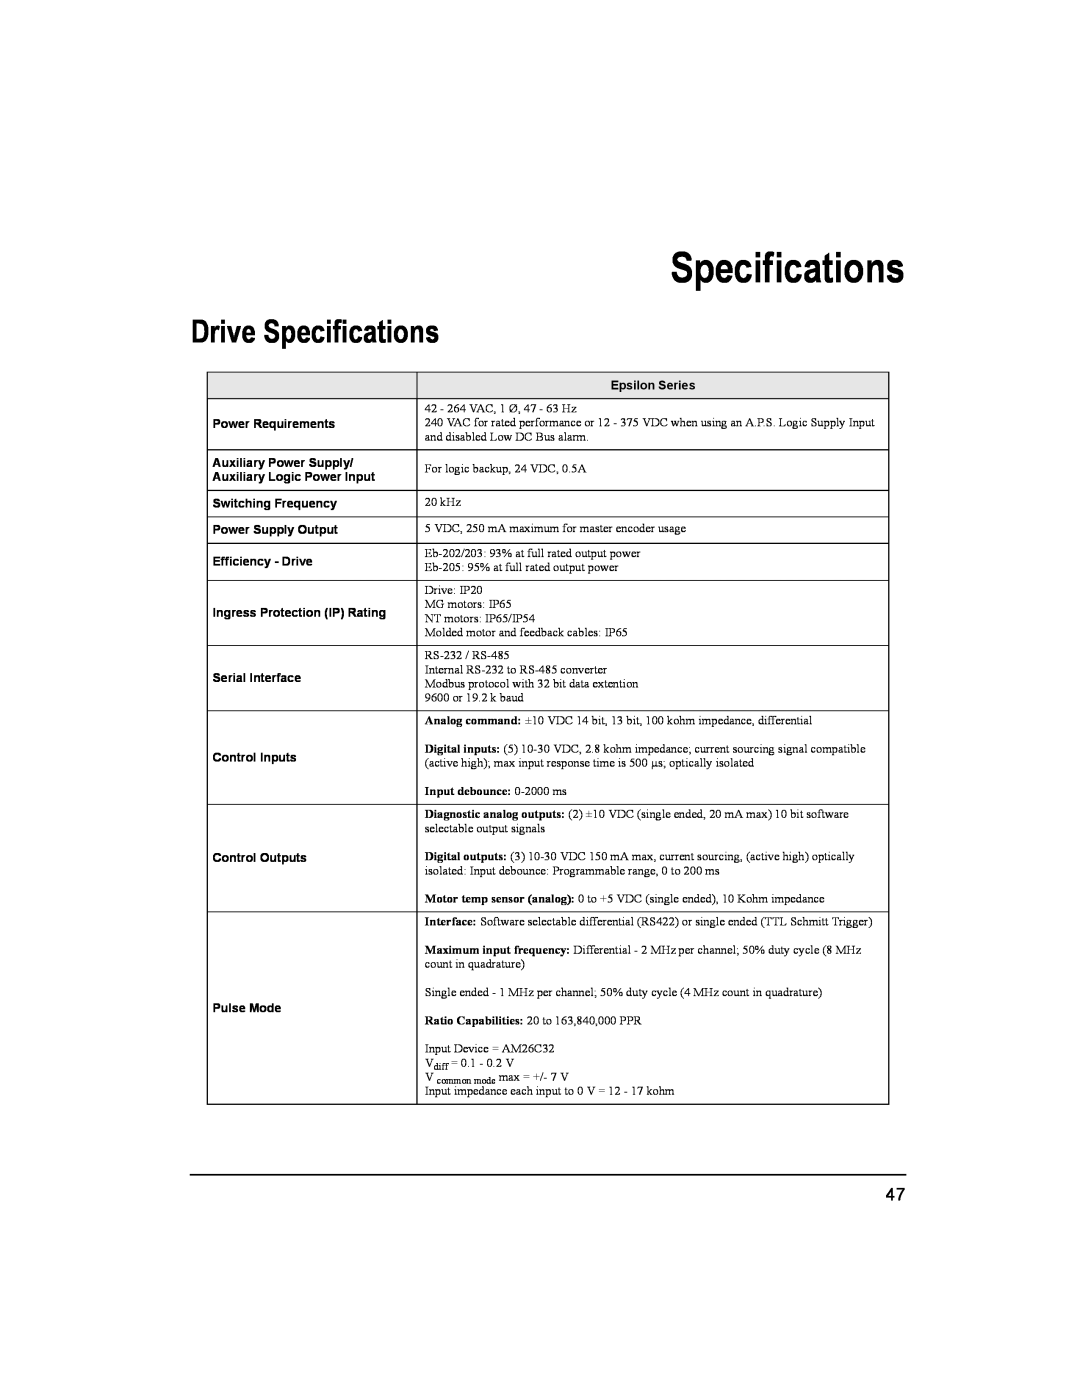 Emerson Epsilon Eb Digital Servo Drive Drive Specifications, Epsilon Series, Power Requirements, Switching Frequency 